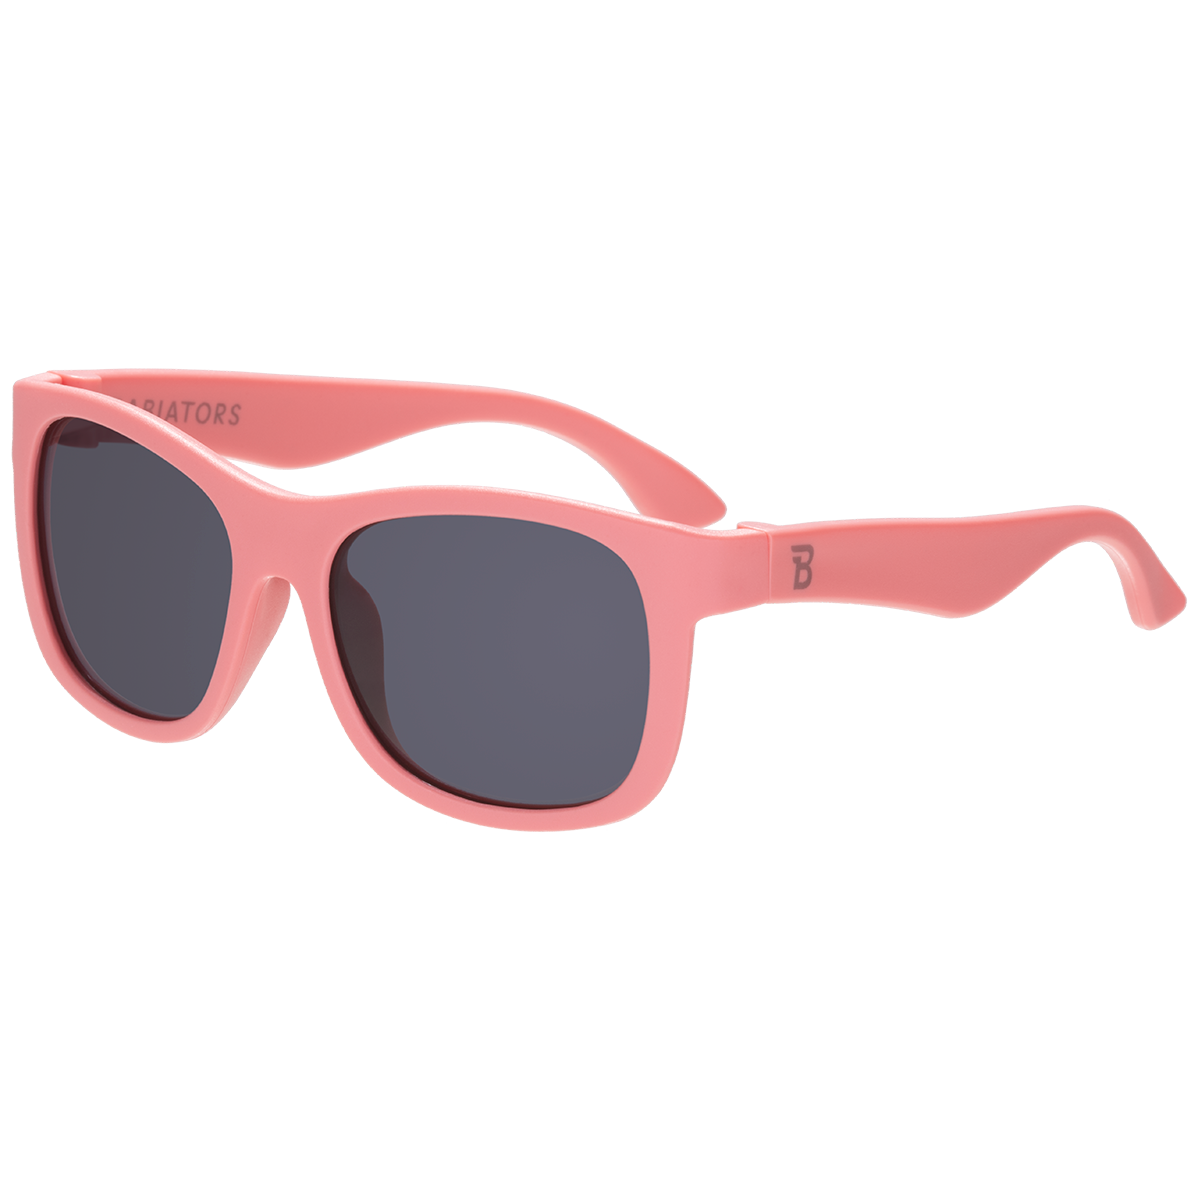 Babiators - Navigator Sunglasses in Seashell Pink: Ages 0-2